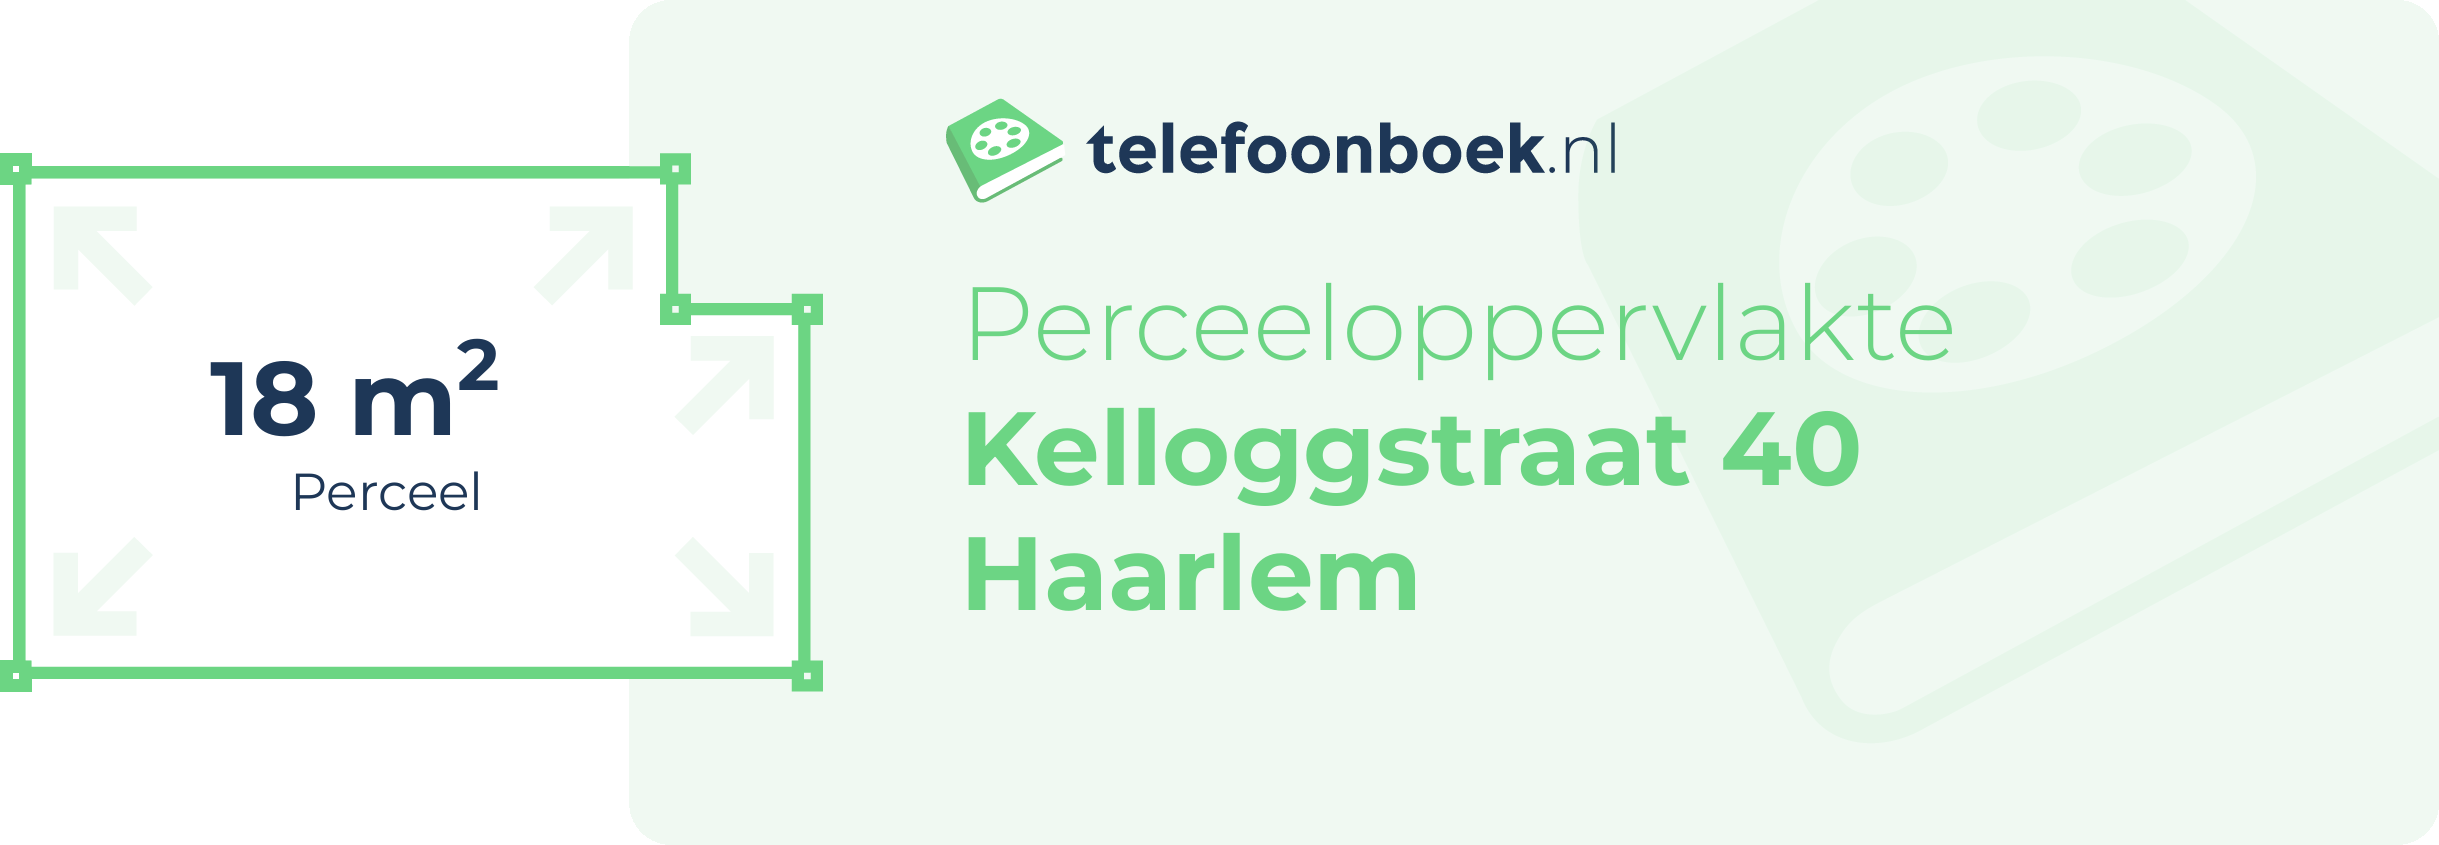 Perceeloppervlakte Kelloggstraat 40 Haarlem